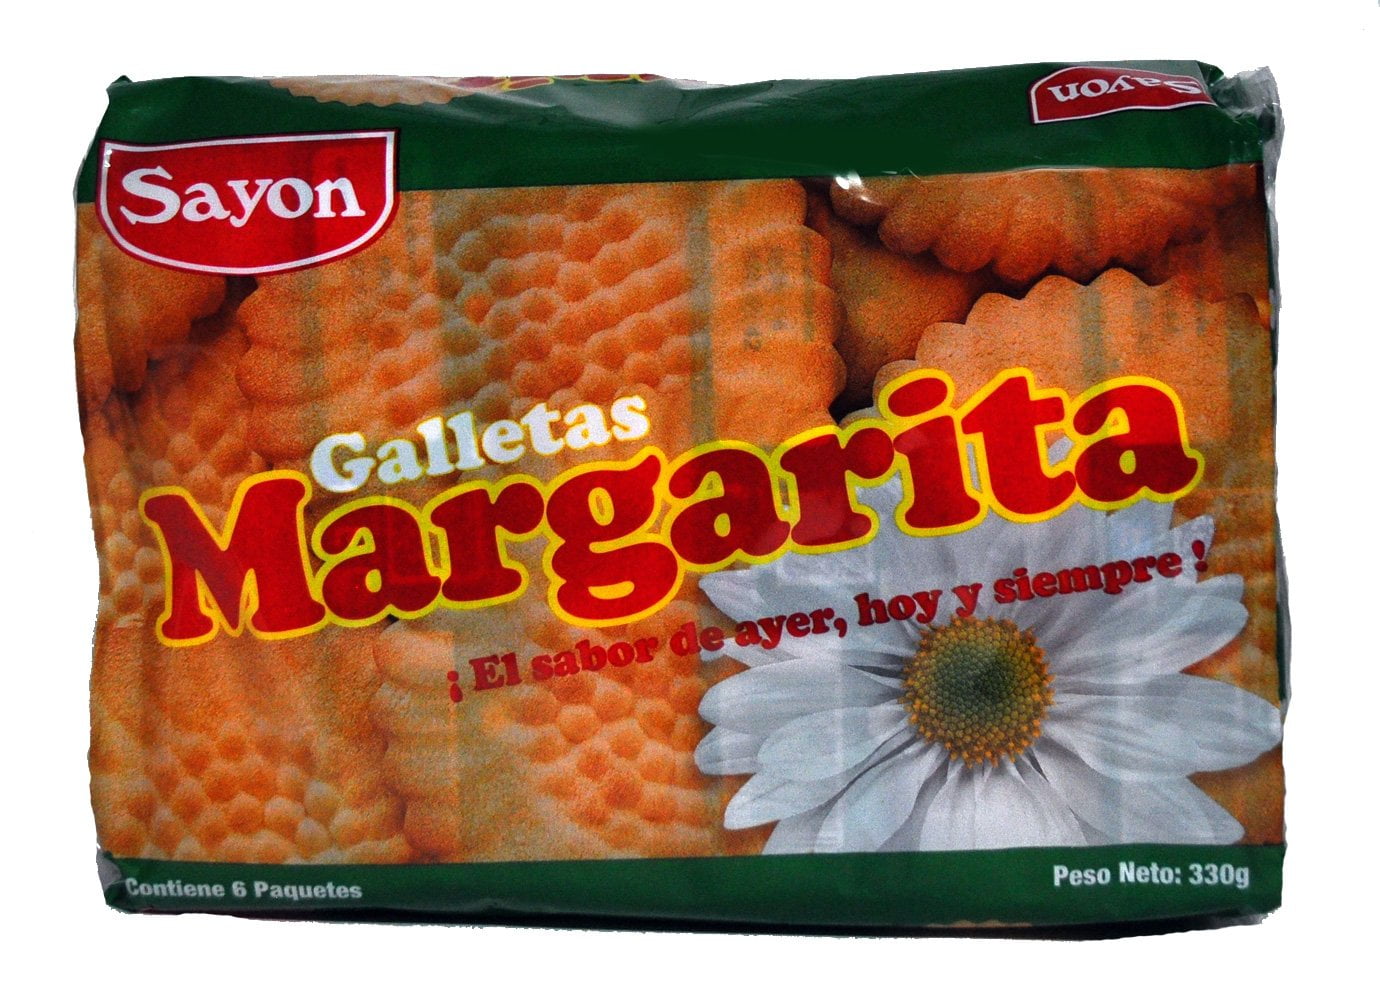 Sayon Galletas Margarita 6 Pack Bag - Peruchos Food